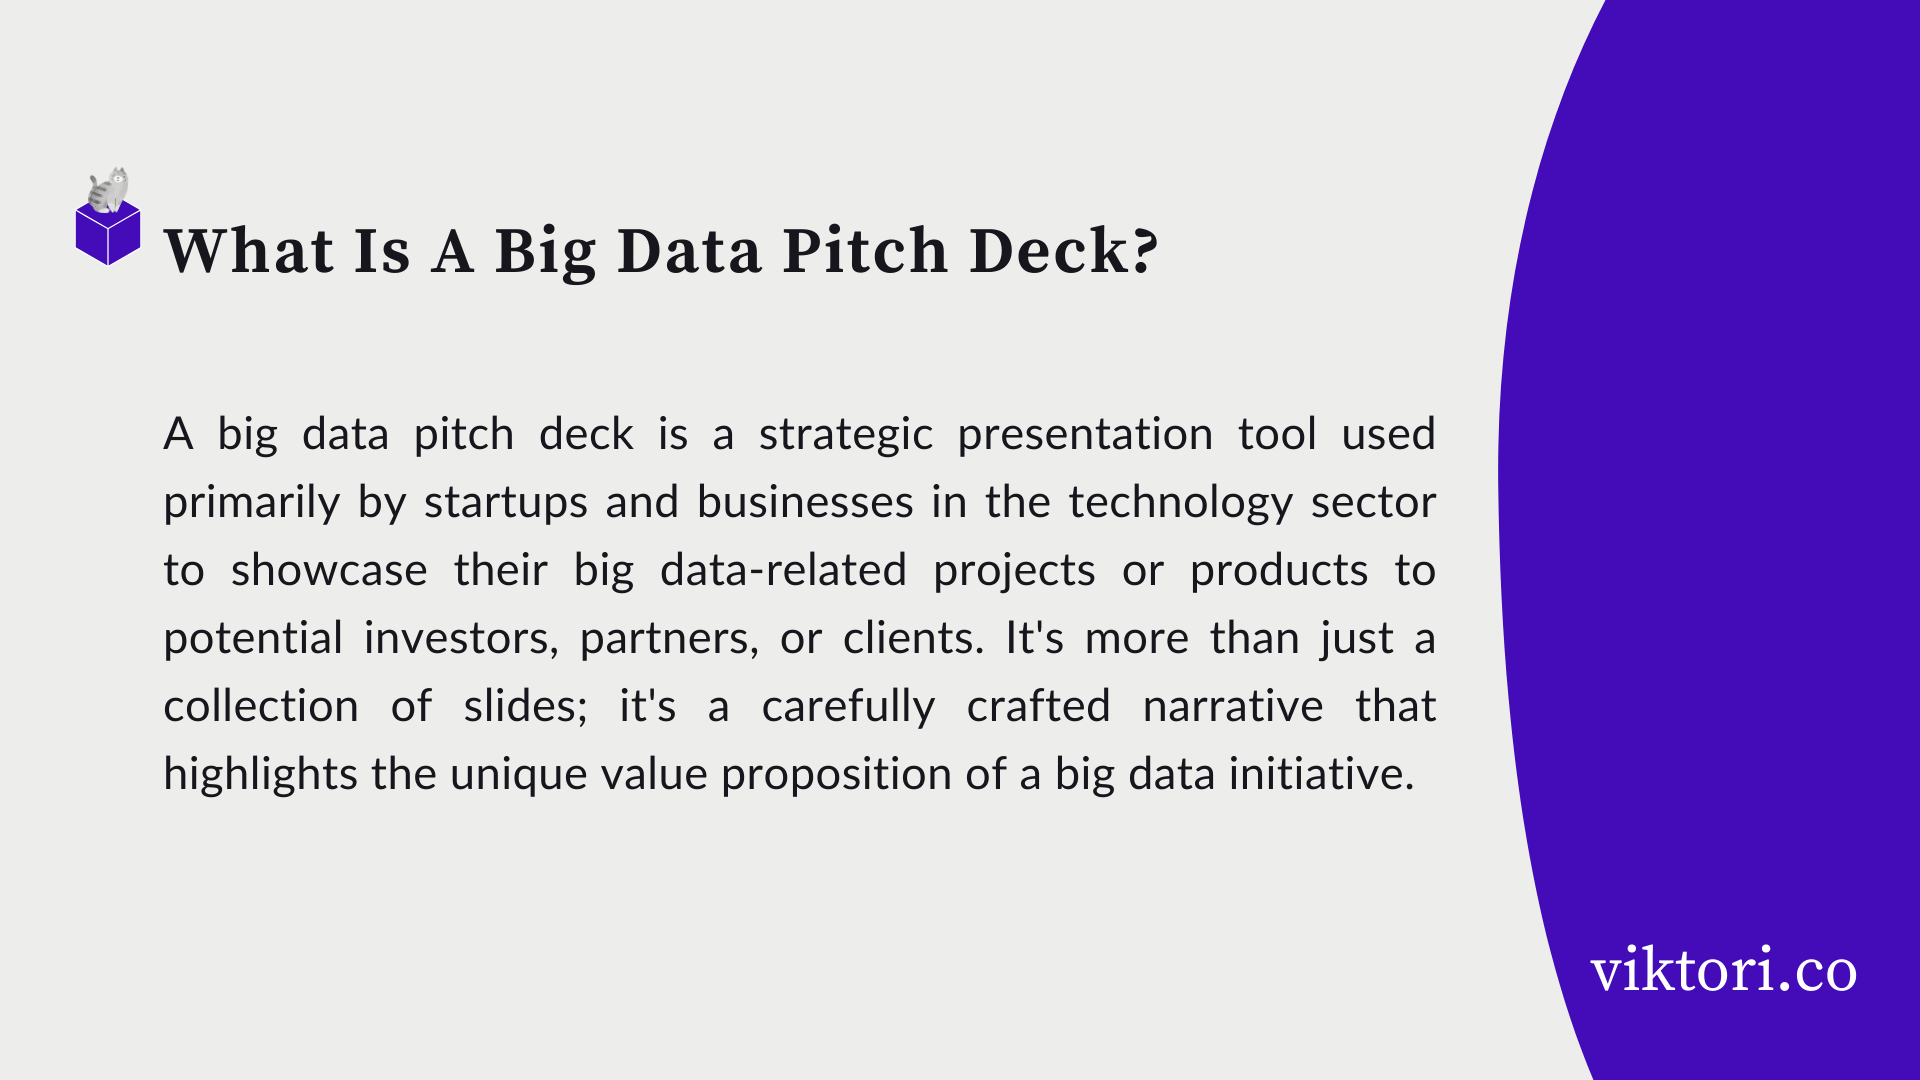 big data pitch deck definition